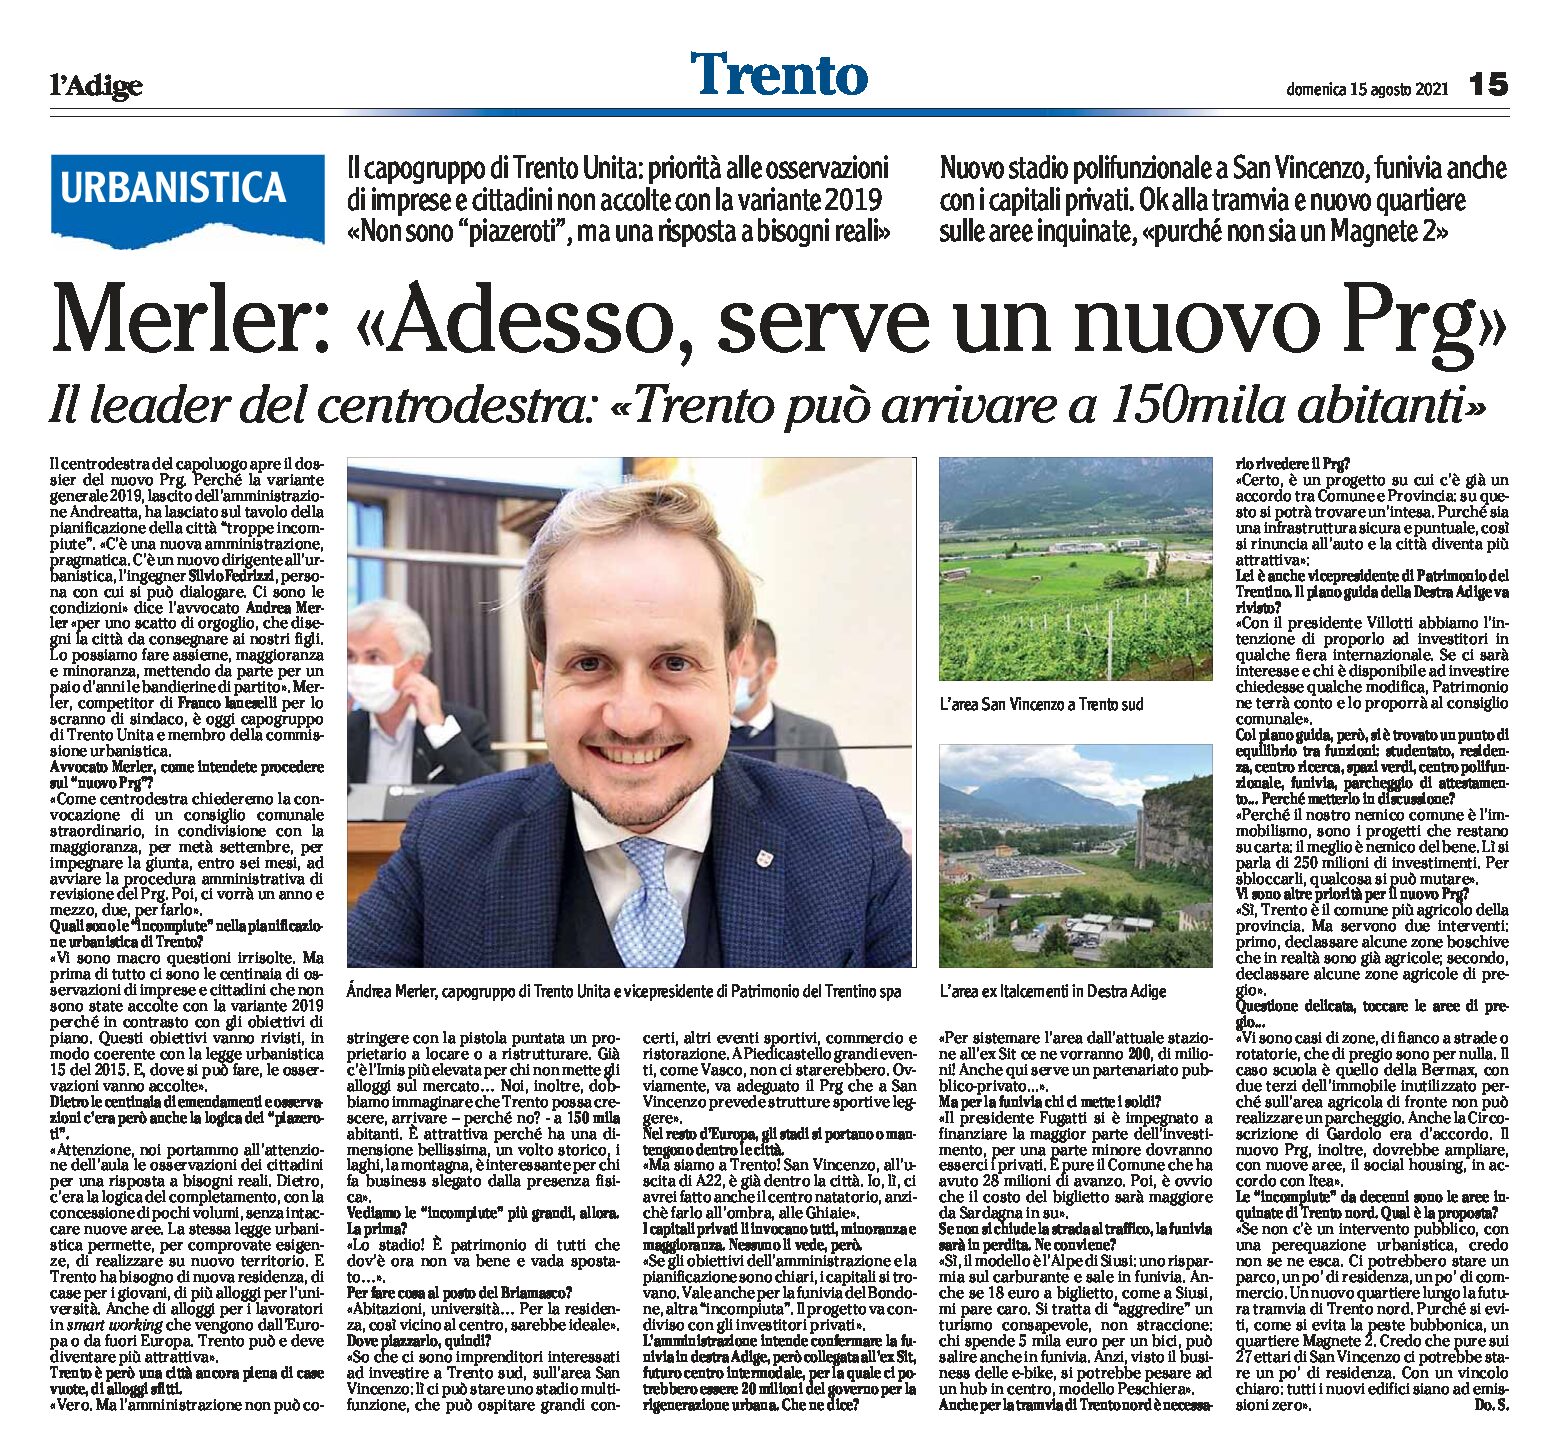 Urbanistica: intervista a Merler “serve un nuovo Prg, Trento può arrivare a 150mila abitanti”